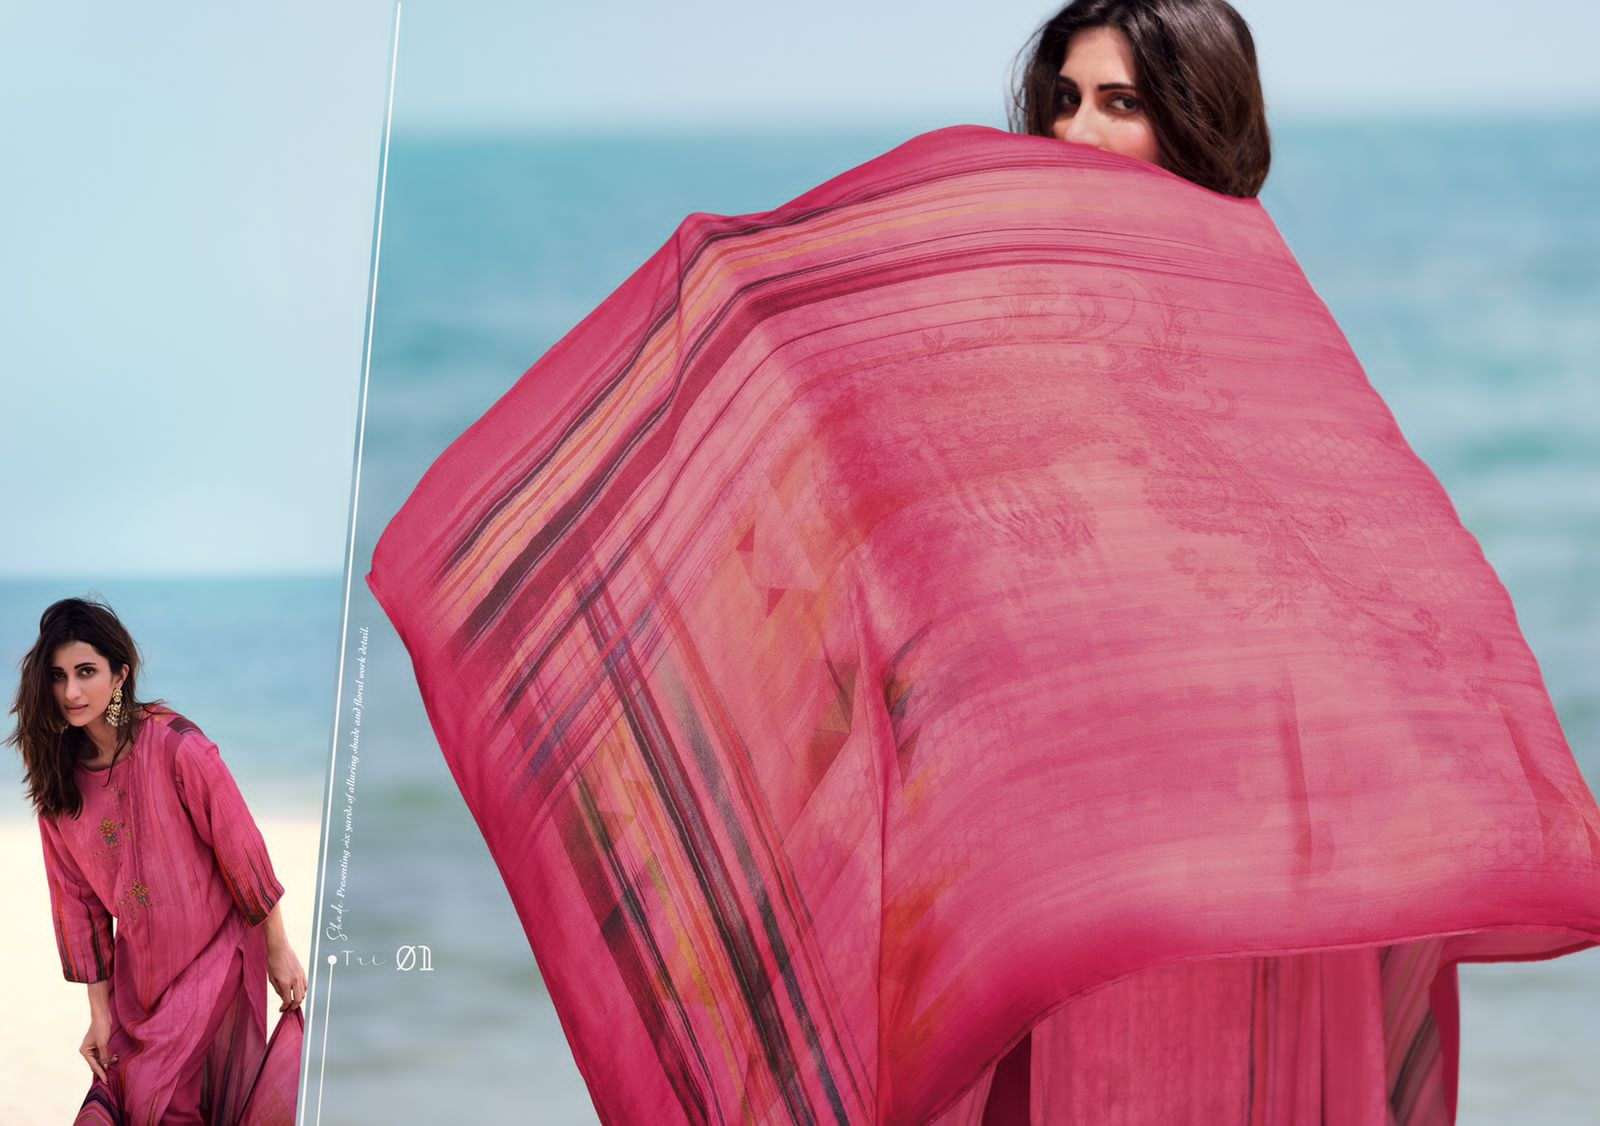 varsha fashion trinity muslin digital printed unstich salwar suits collection surat